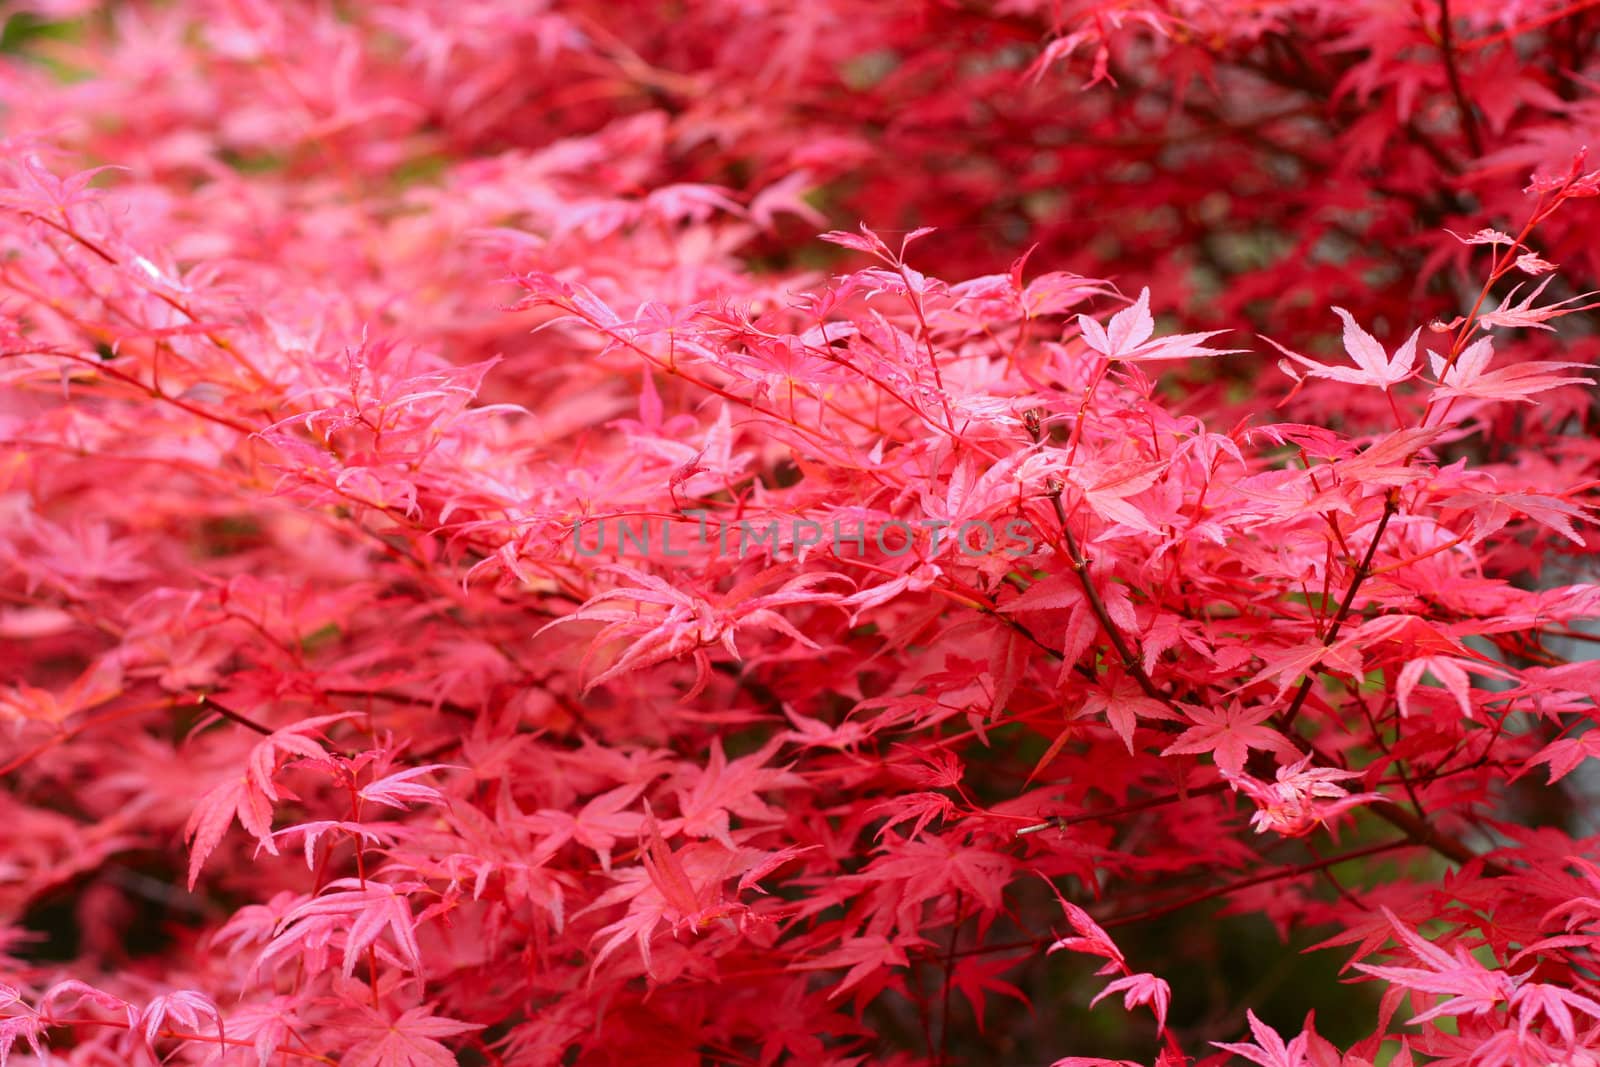 Red leaf texture - maple tree leafs